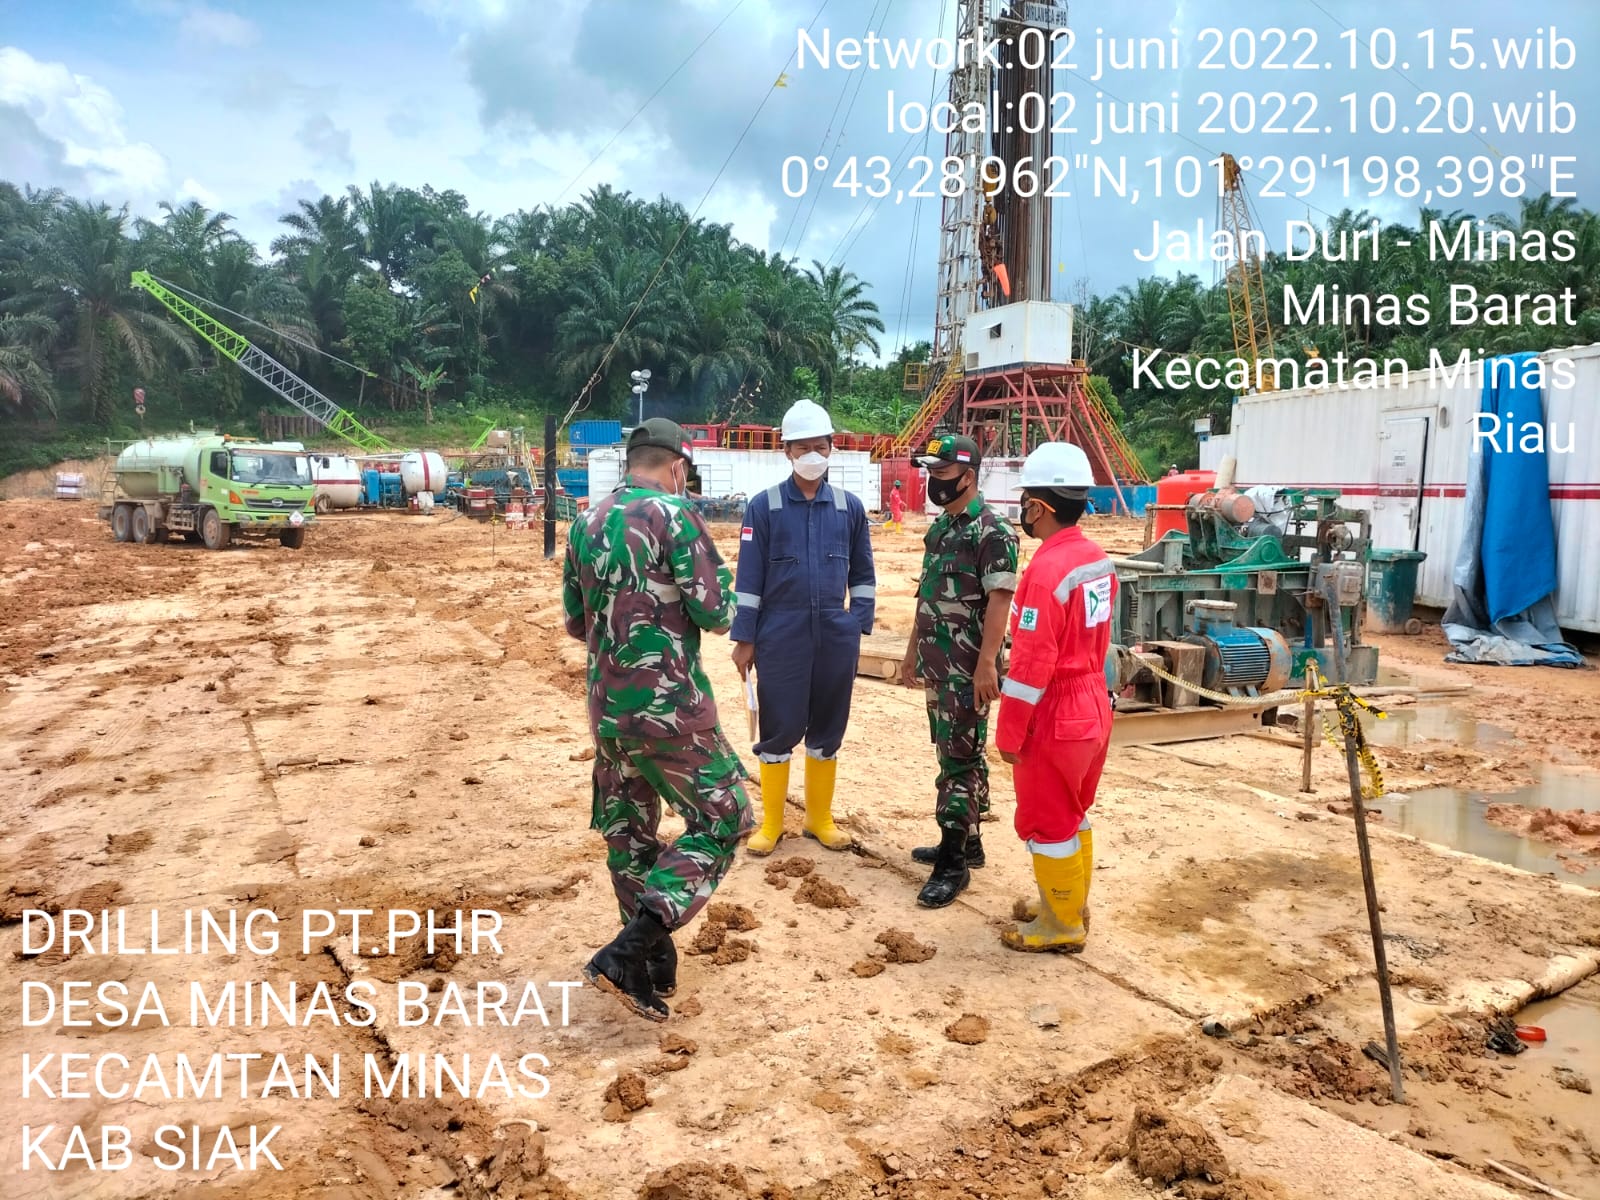 Serma Muhammad Nasir & Serda Parjuni Lakukan Patroli Drilling di Area PT PHR Minas